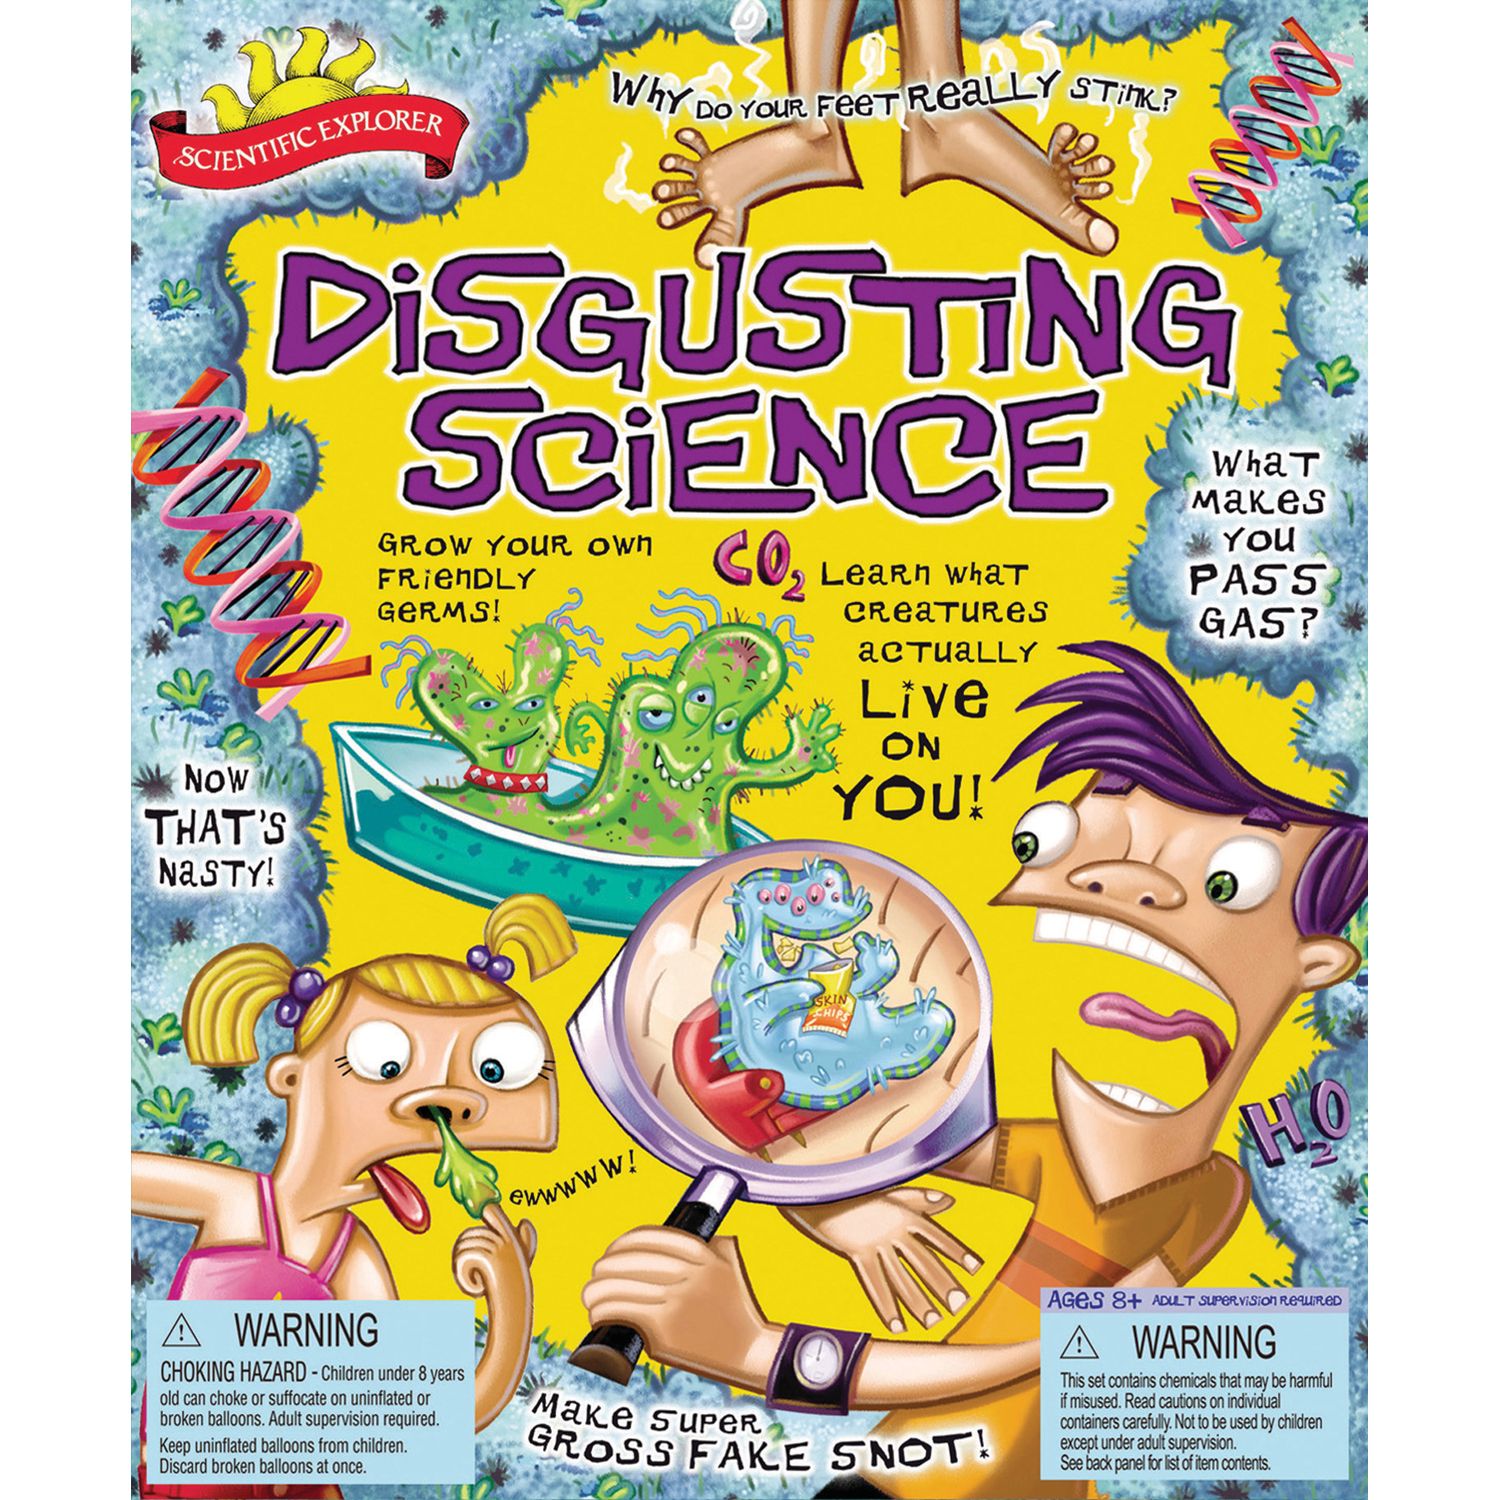 Scientific Explorer 0SA222 Disgusting Science for sale online 